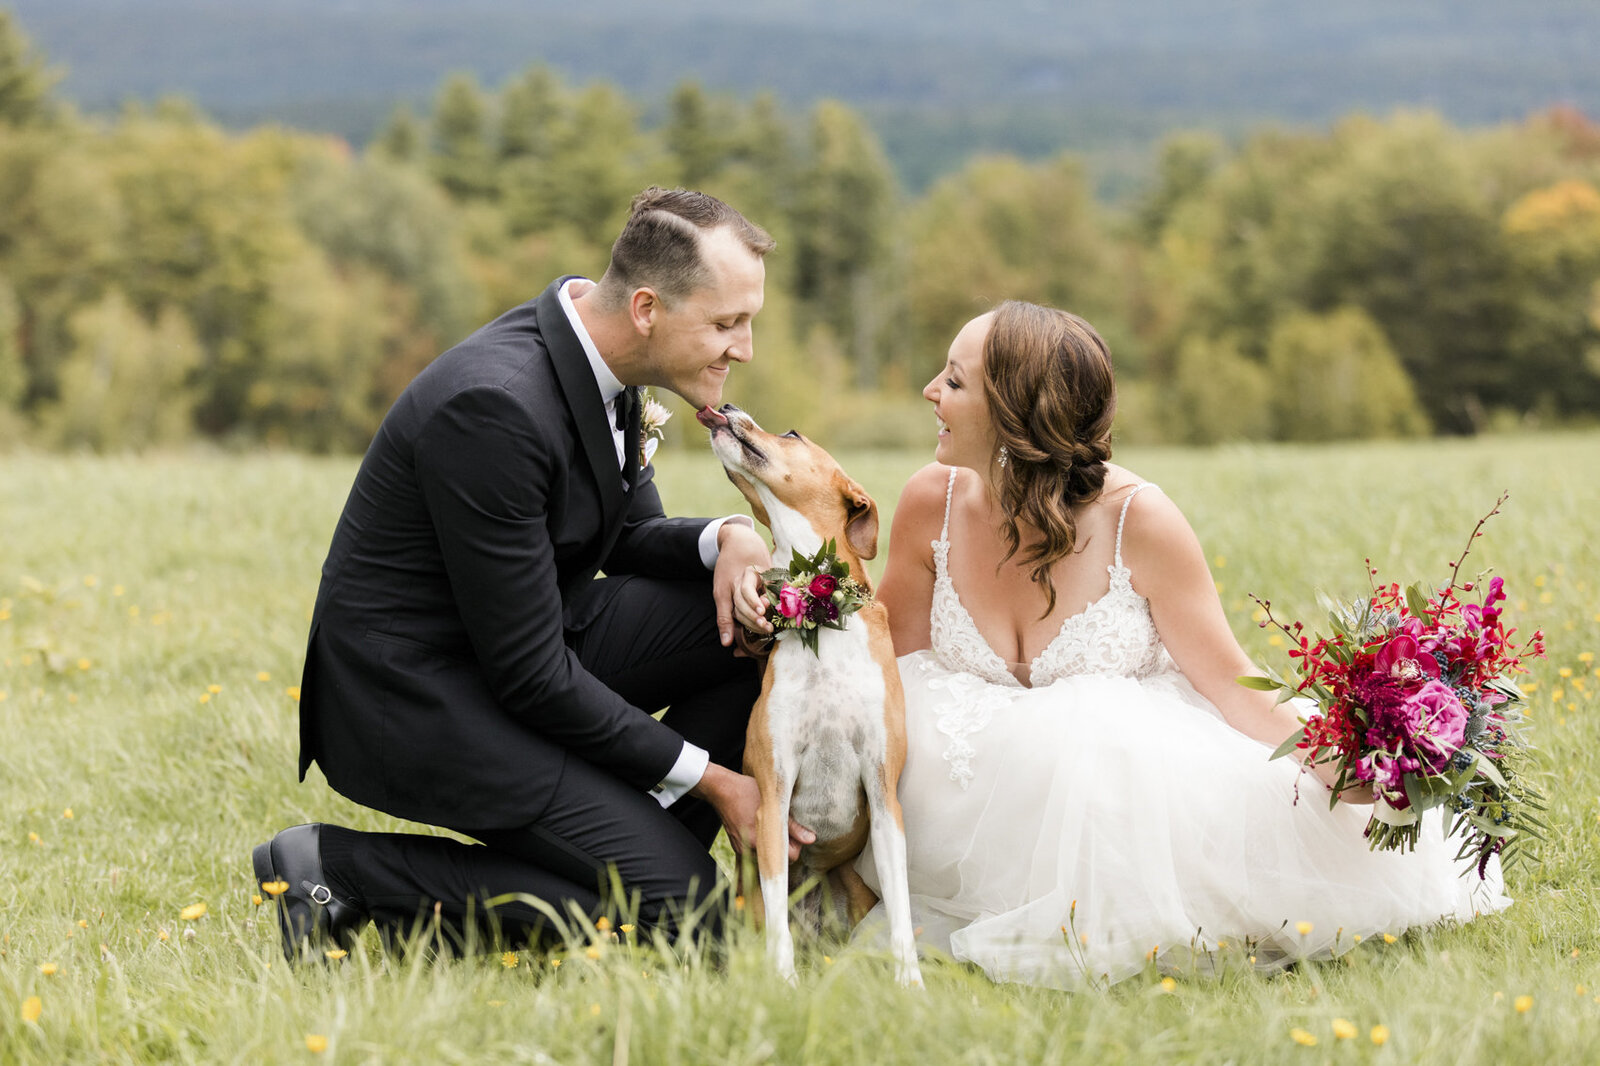 Stowe, VT wedding photography